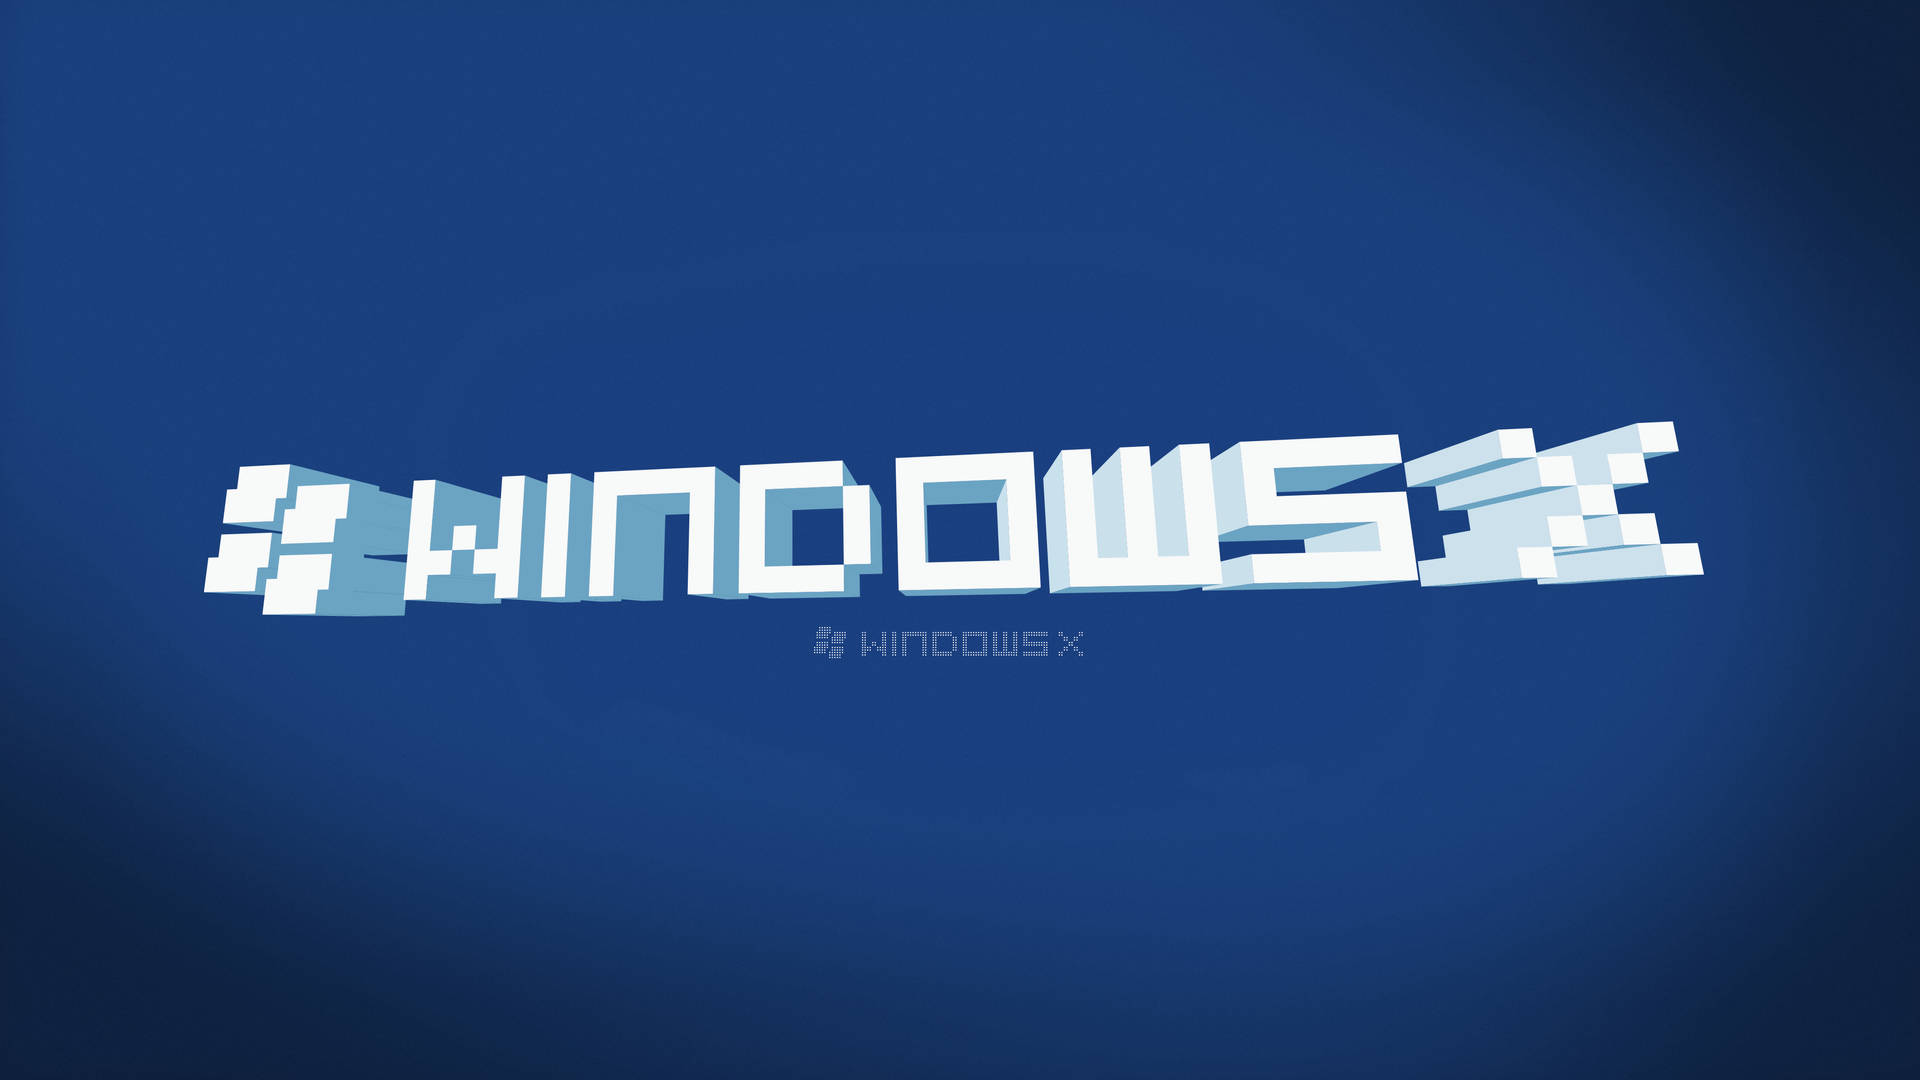 Windows 10 Hd Blue X